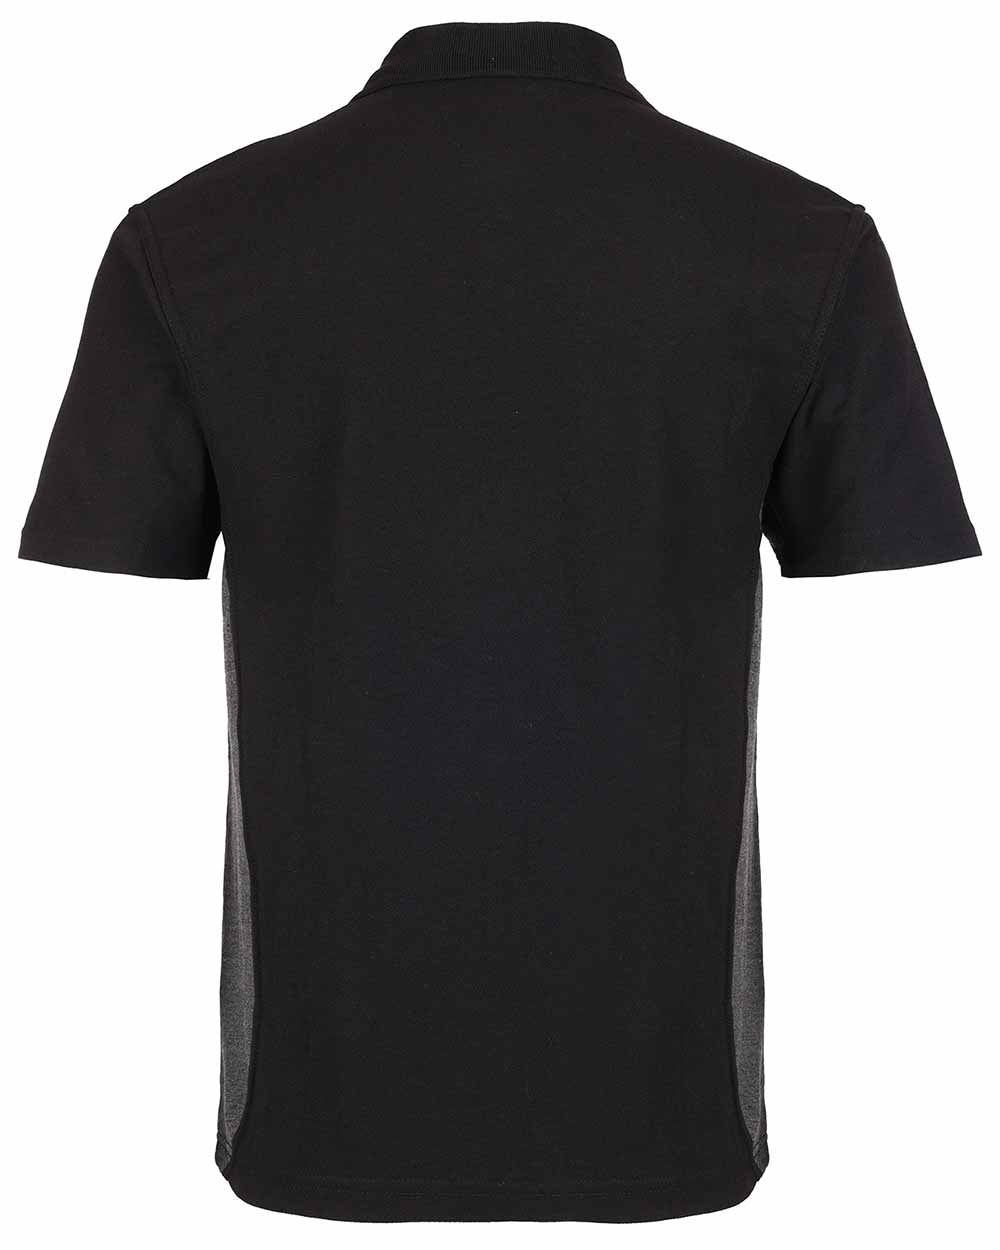 Black Coloured TuffStuff Pro Work Polo Shirt On A White Background 